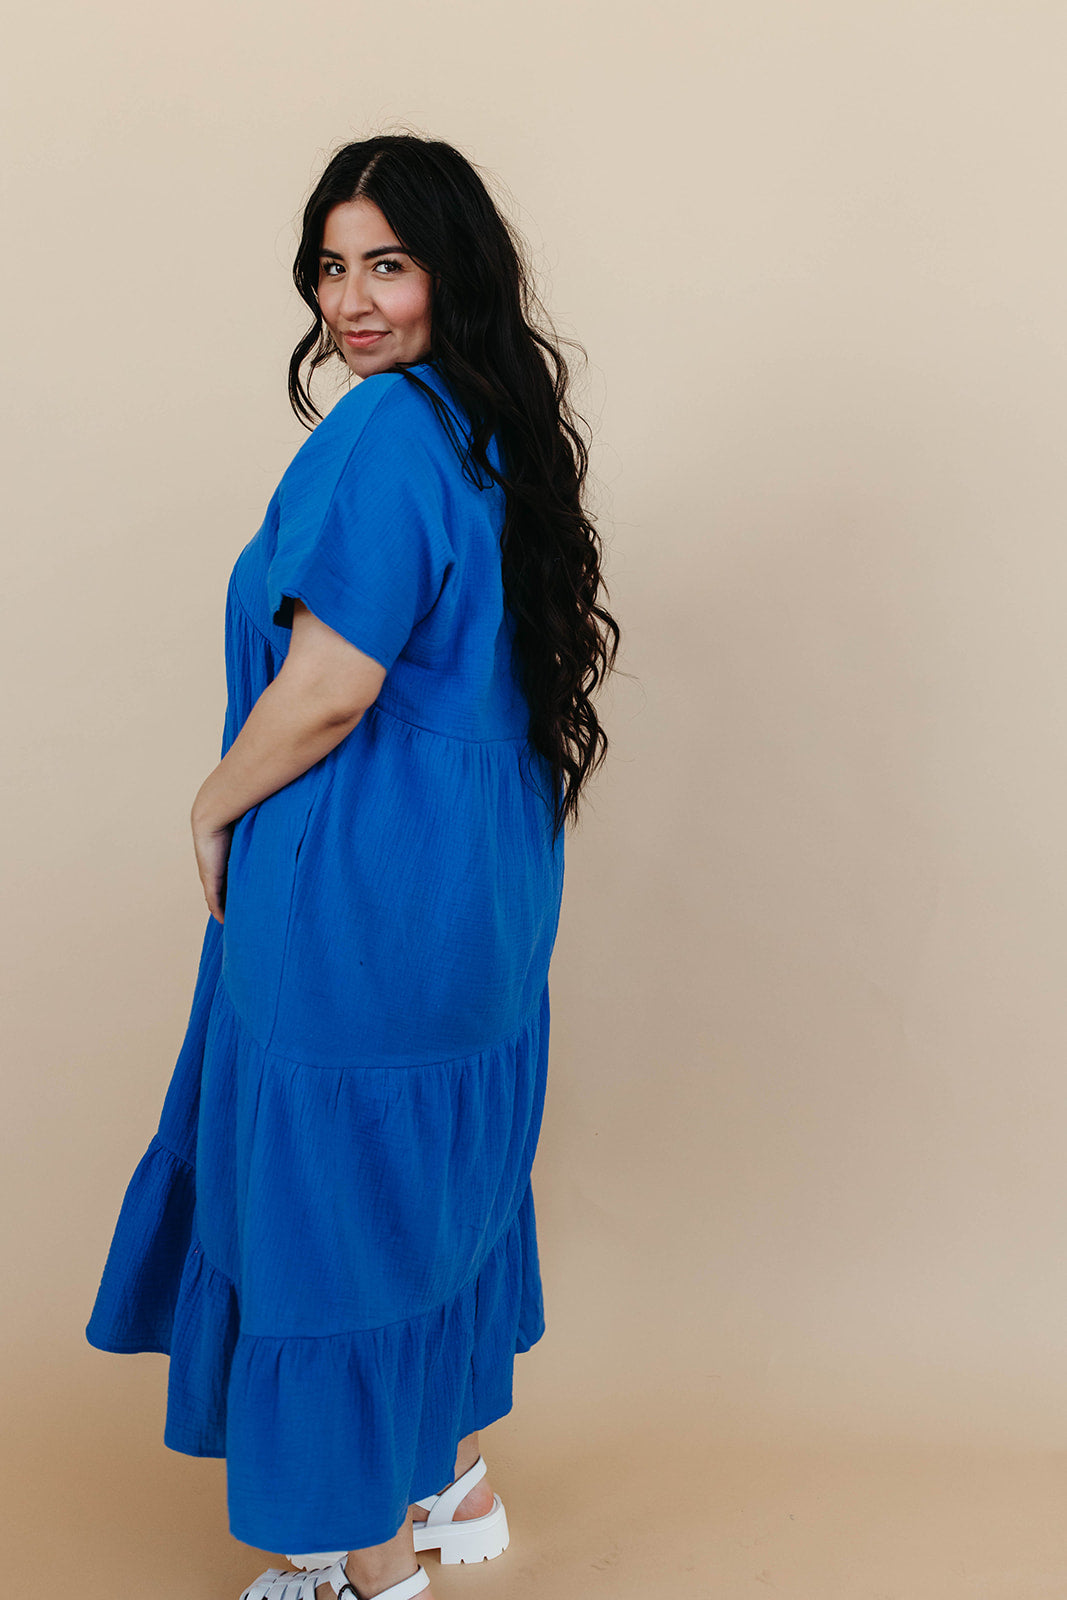 THE RITA WOVEN DRESS IN ROYAL BLUE